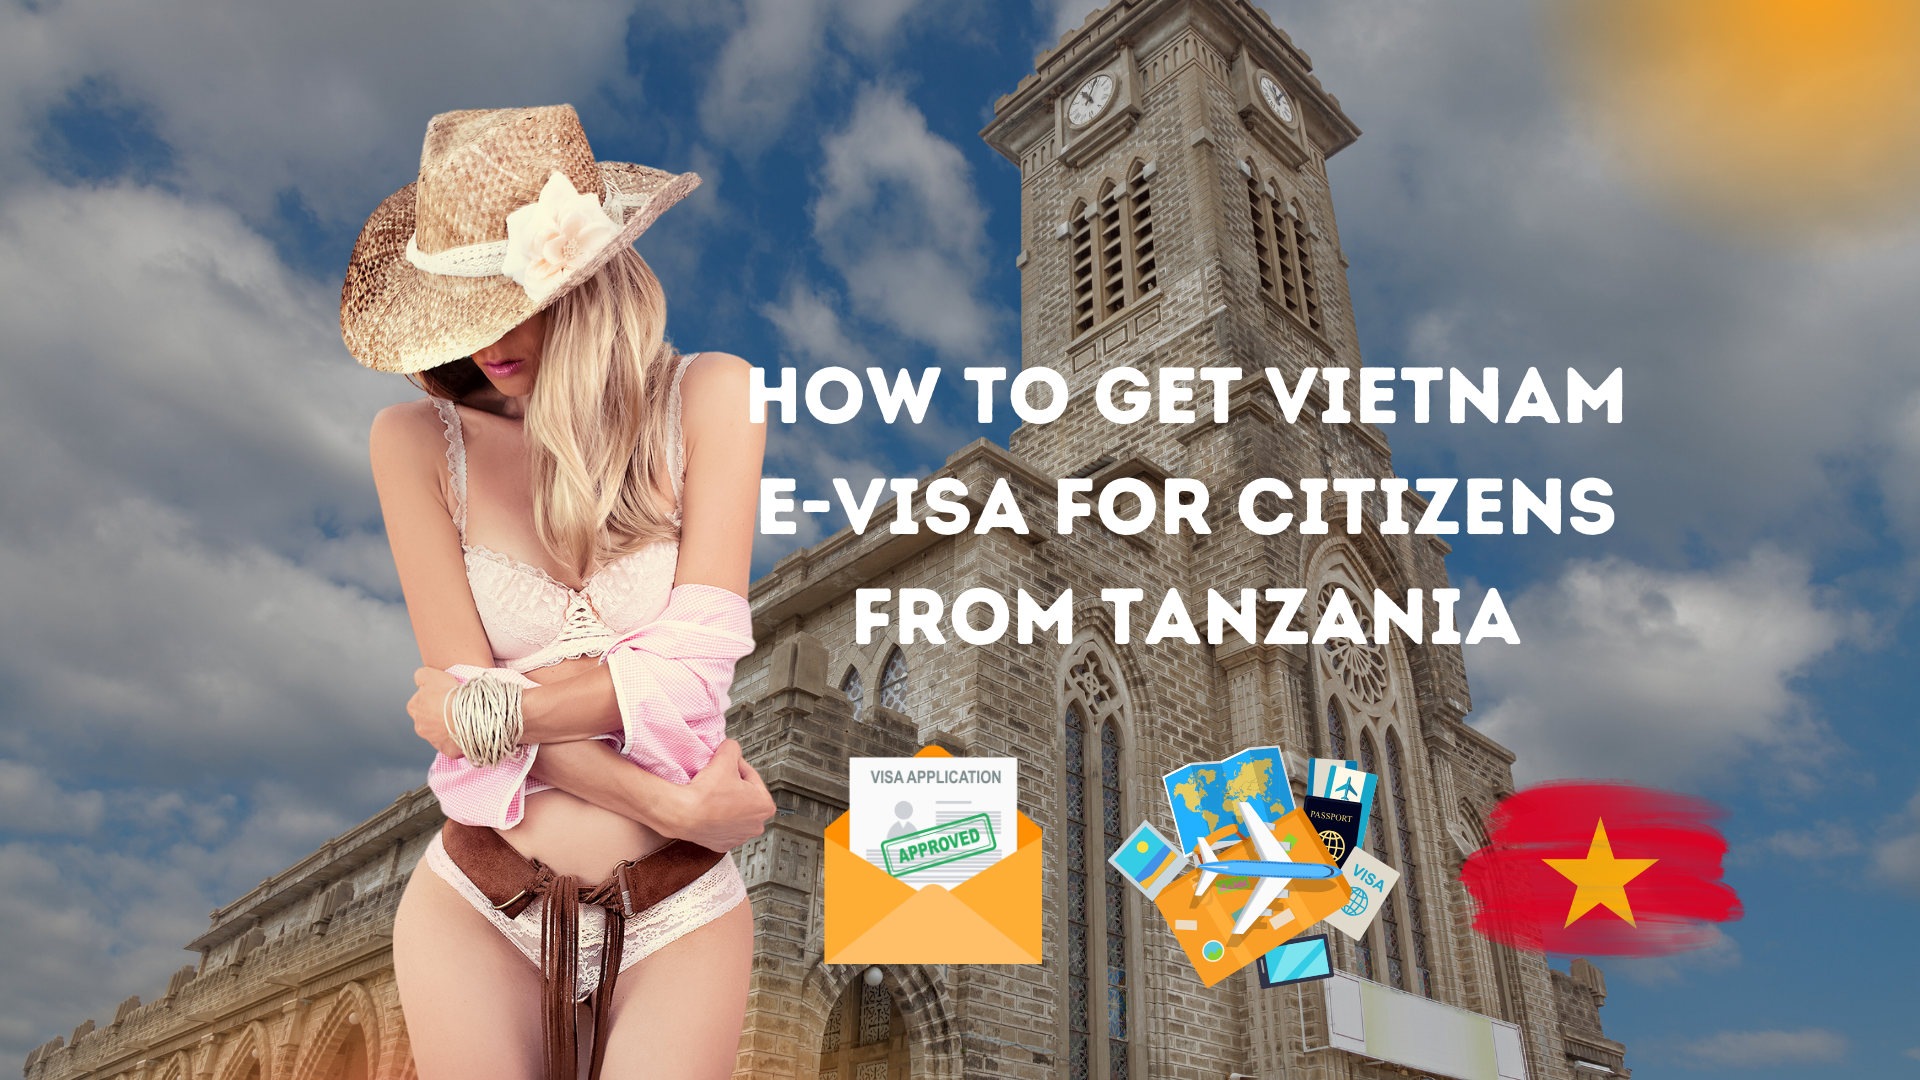 Vietnam Evisa for Citizens from Tanzania